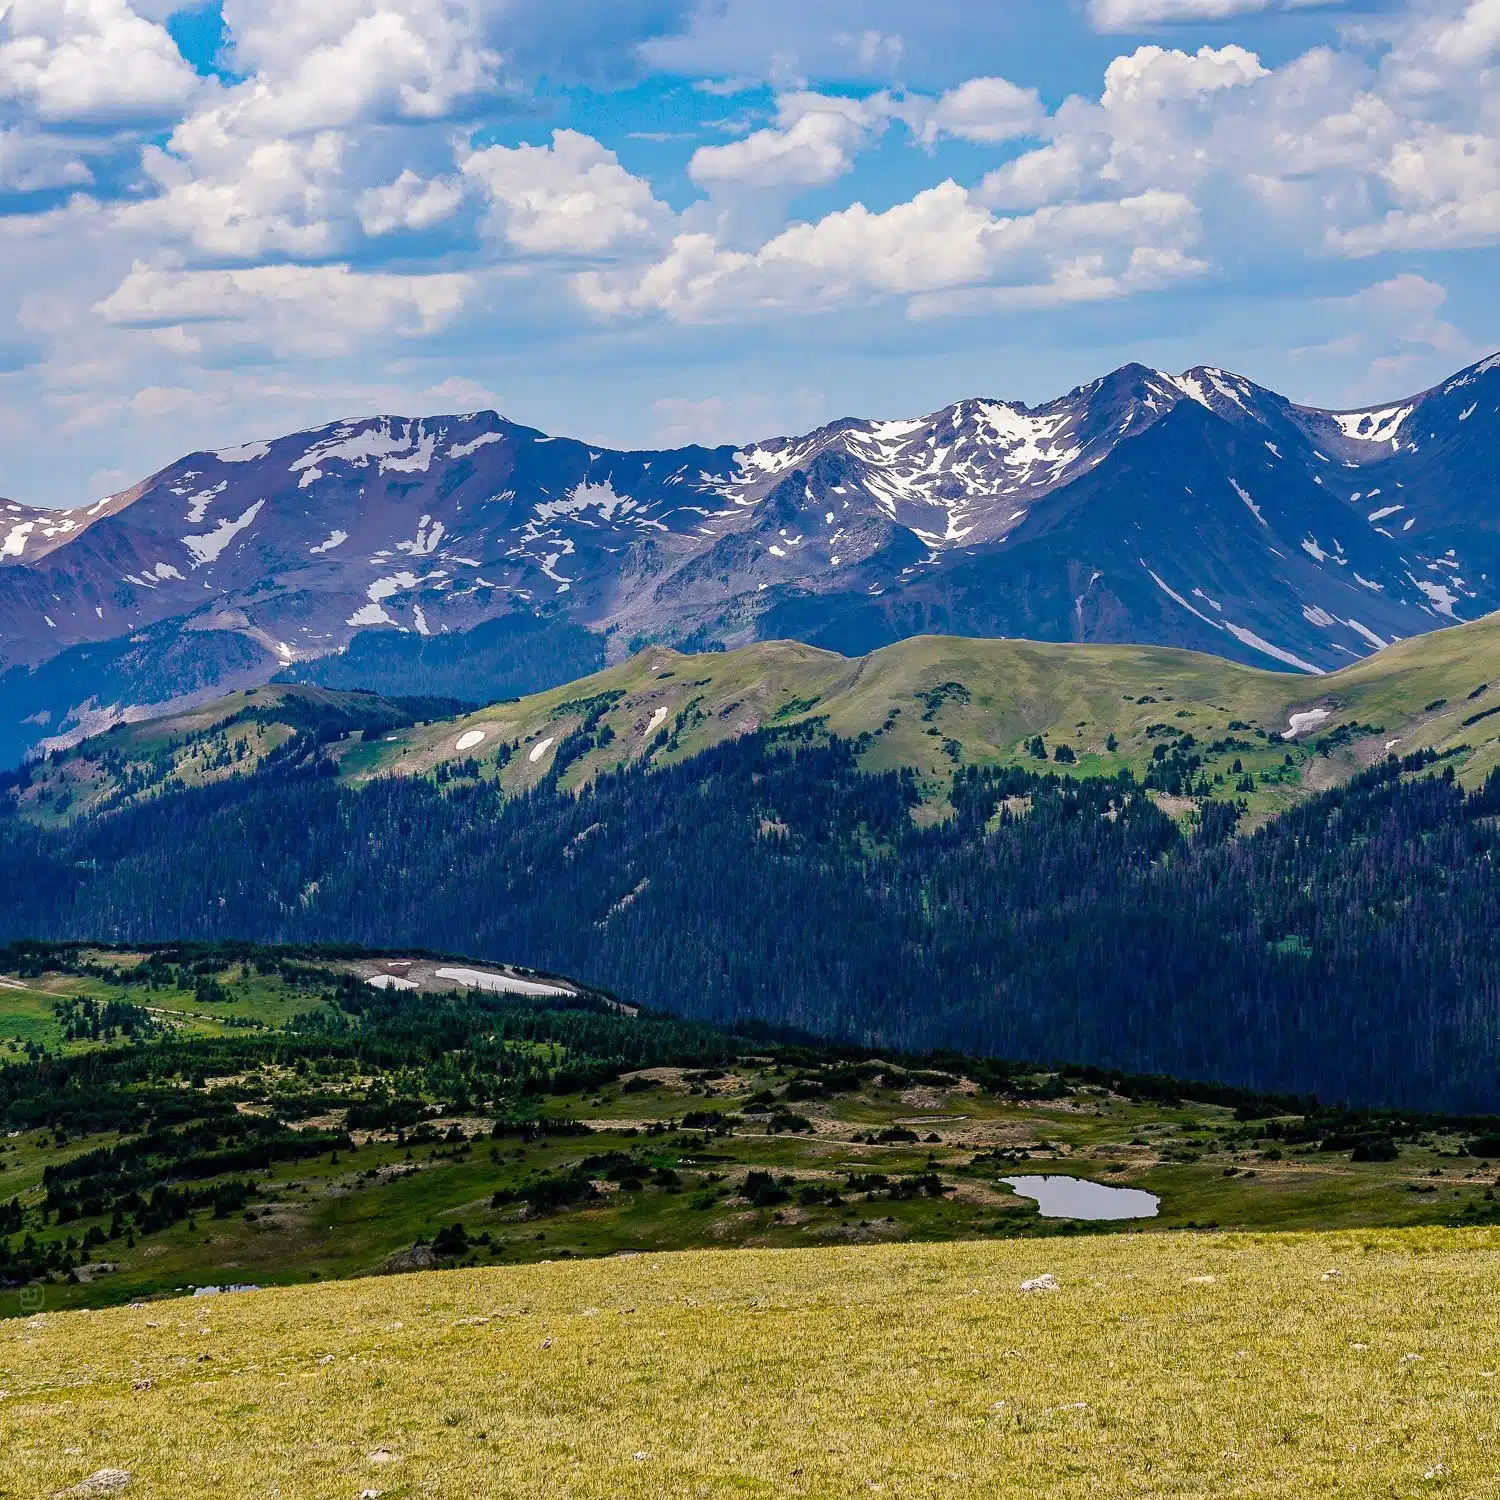 RMNP has Colorado mountains galore